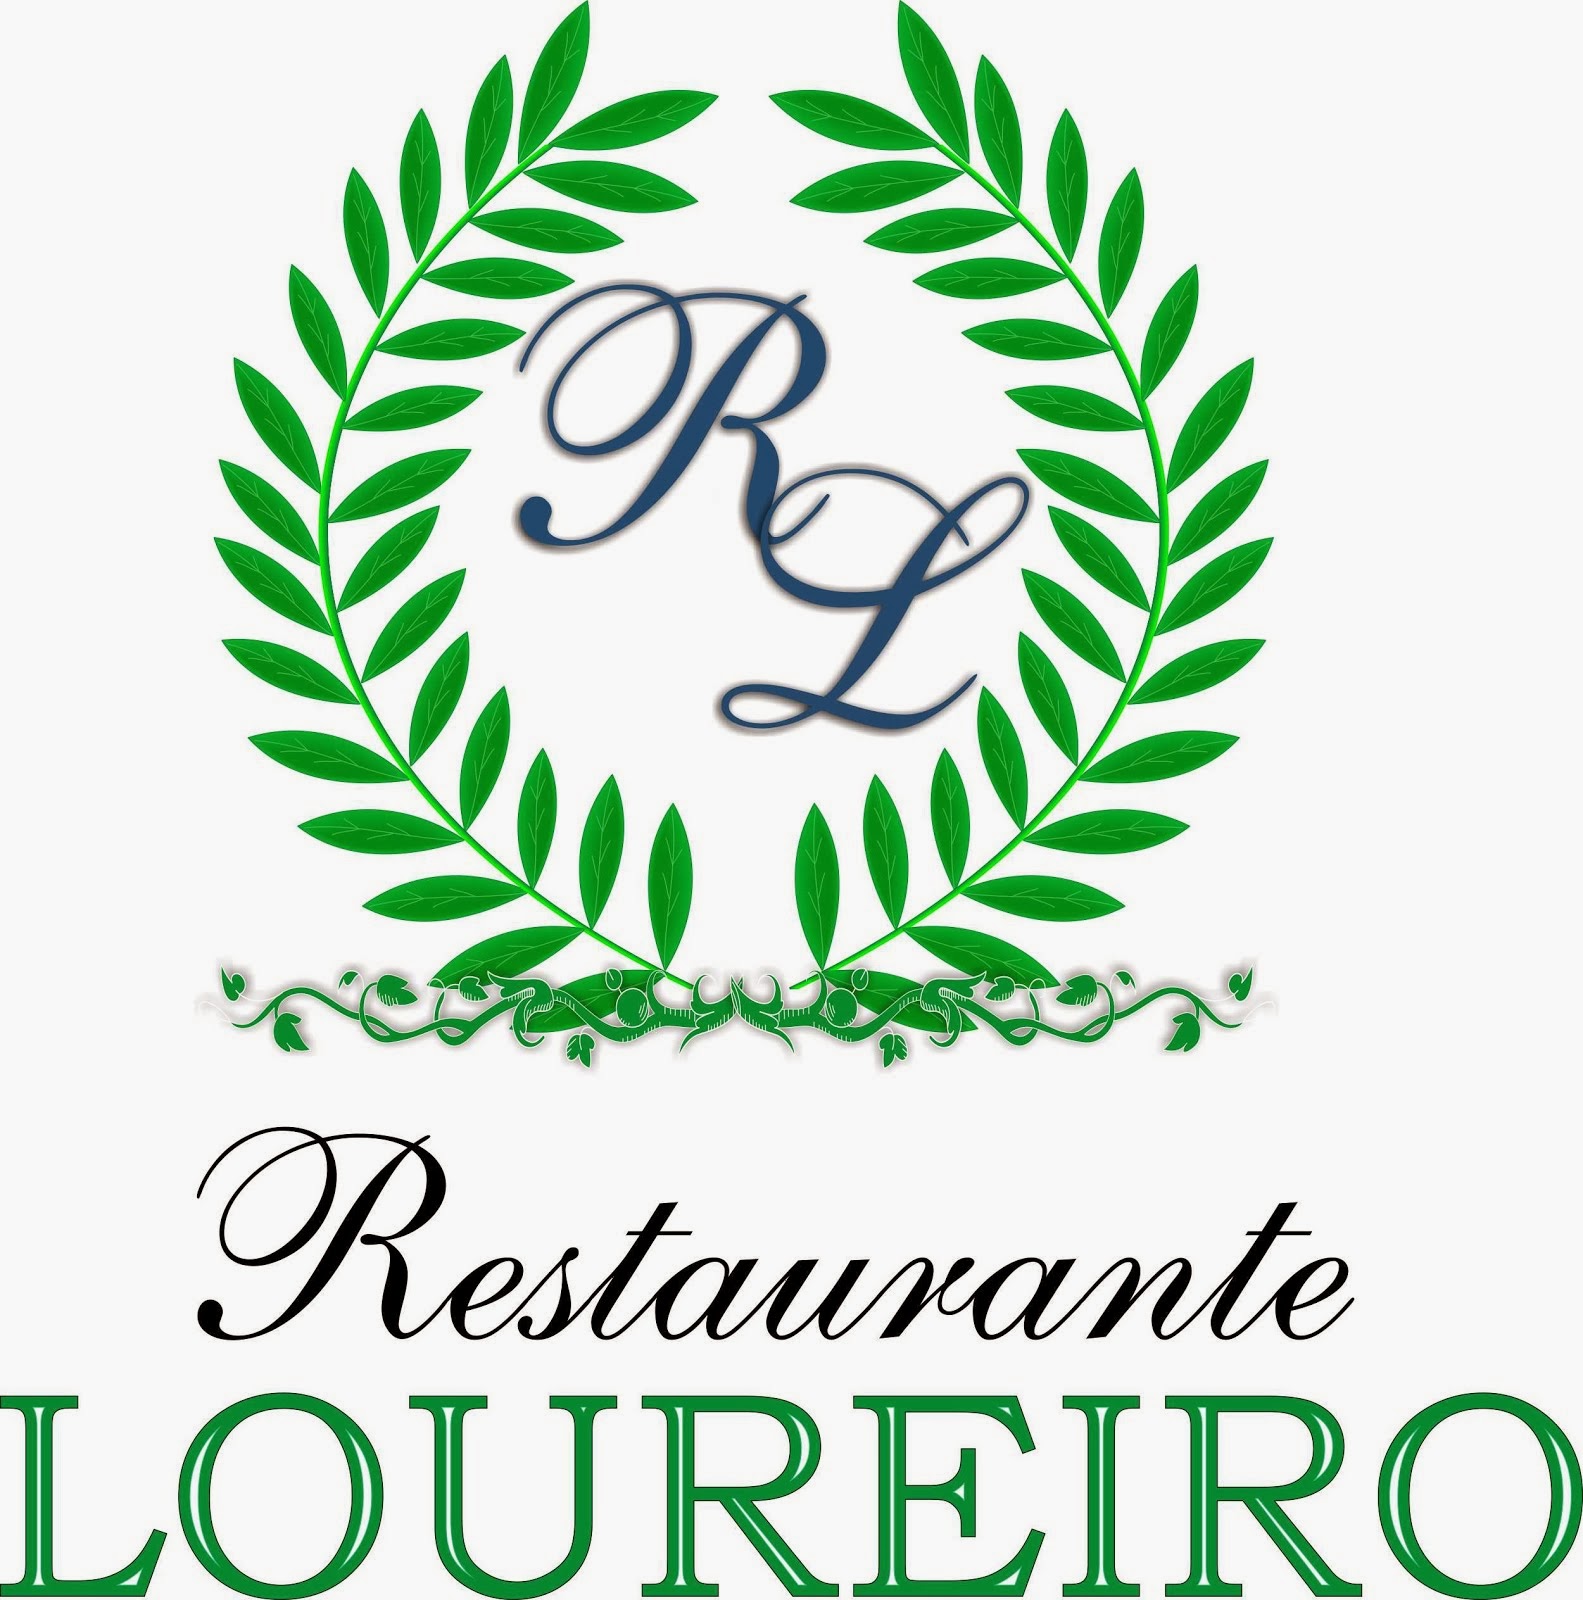 Restaurante Loureiro